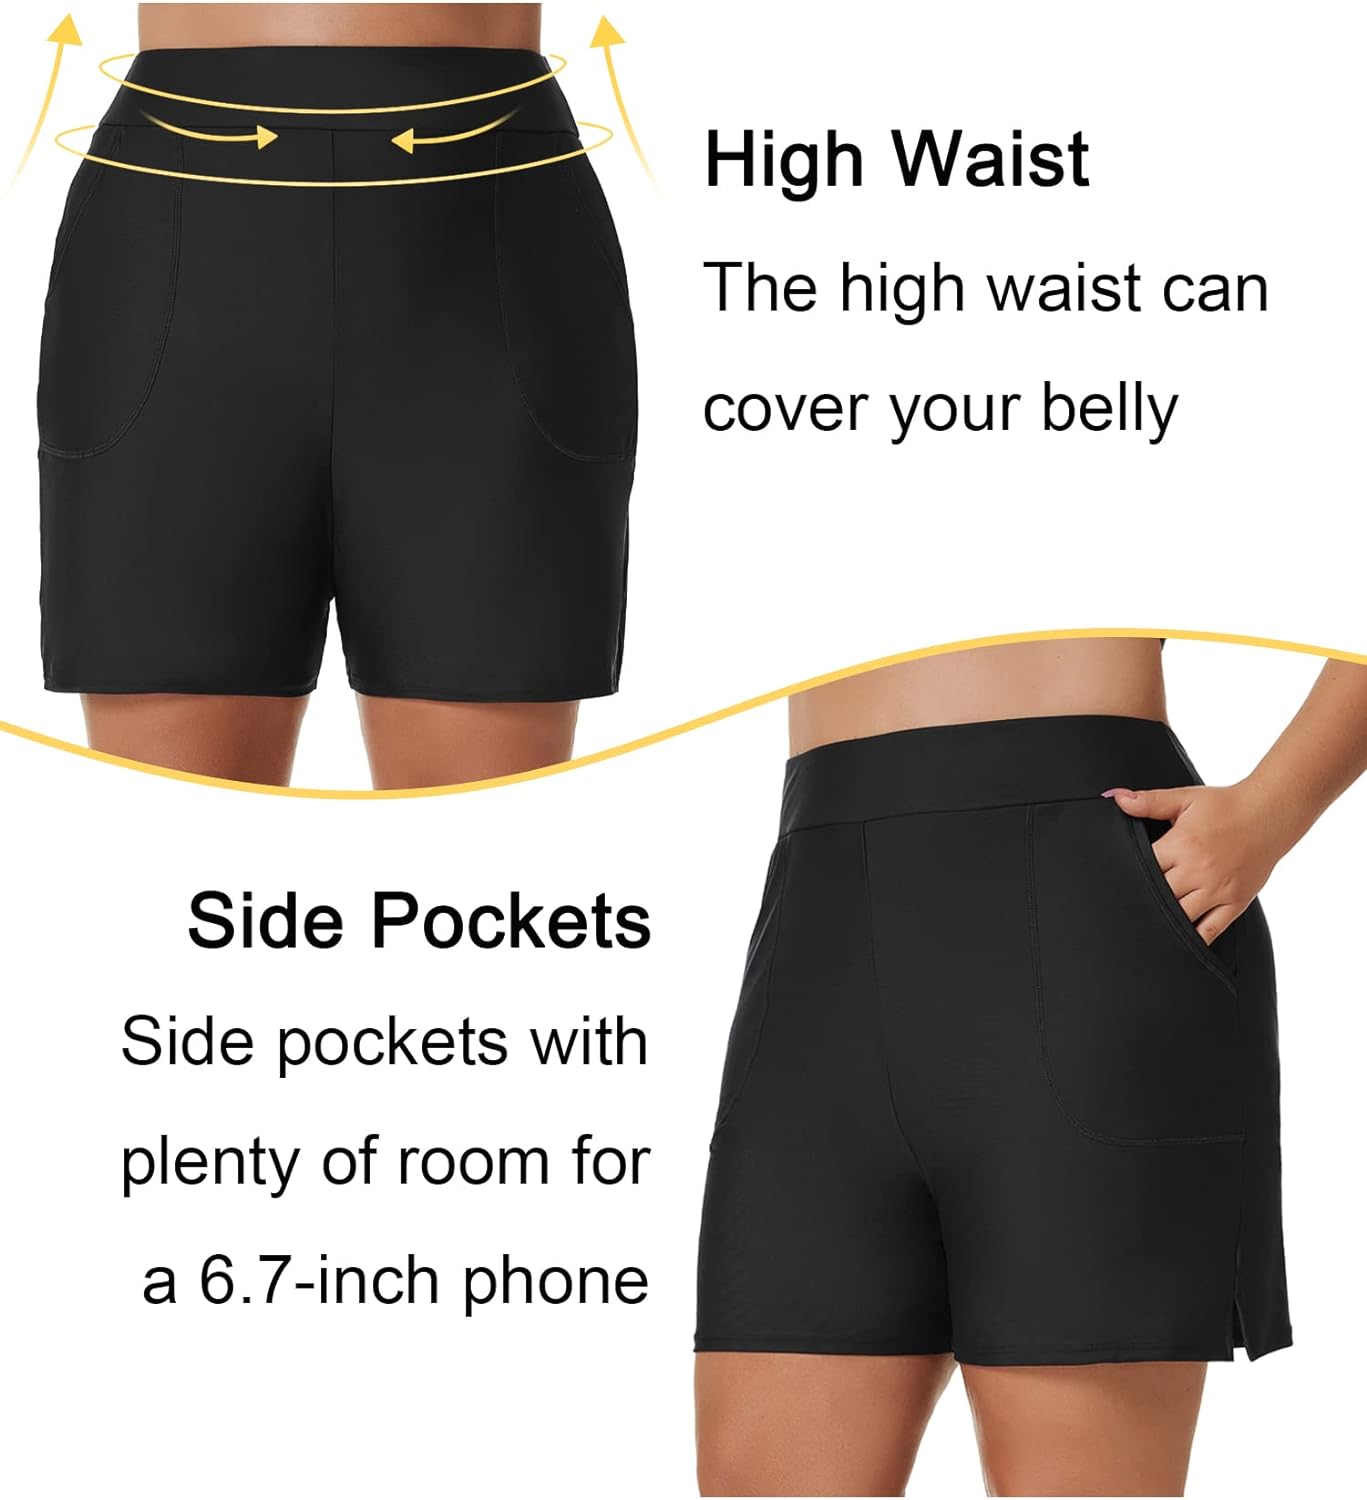 Tournesol Women's 5''-7'' Plus Size Swim Shorts: The Perfect Bathing Suit Bottoms